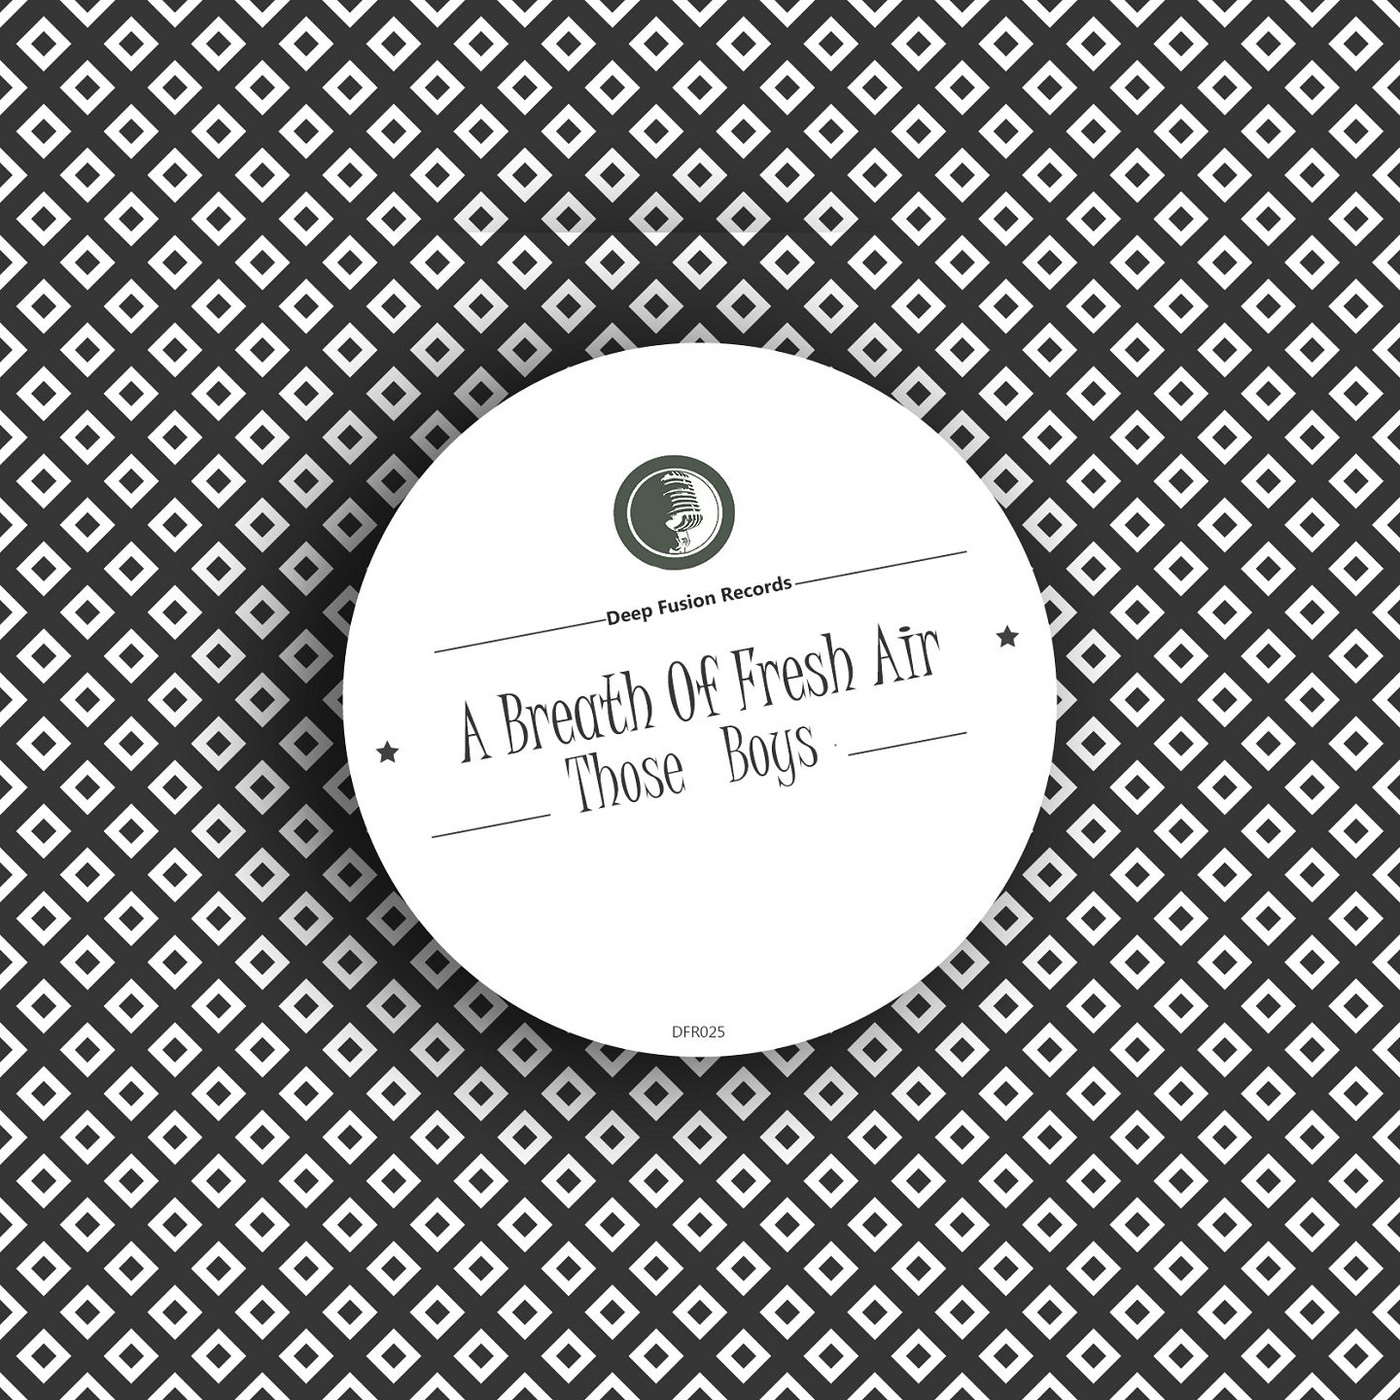 Those Boys - A Breath of Fresh Air / Deep Fusion Records